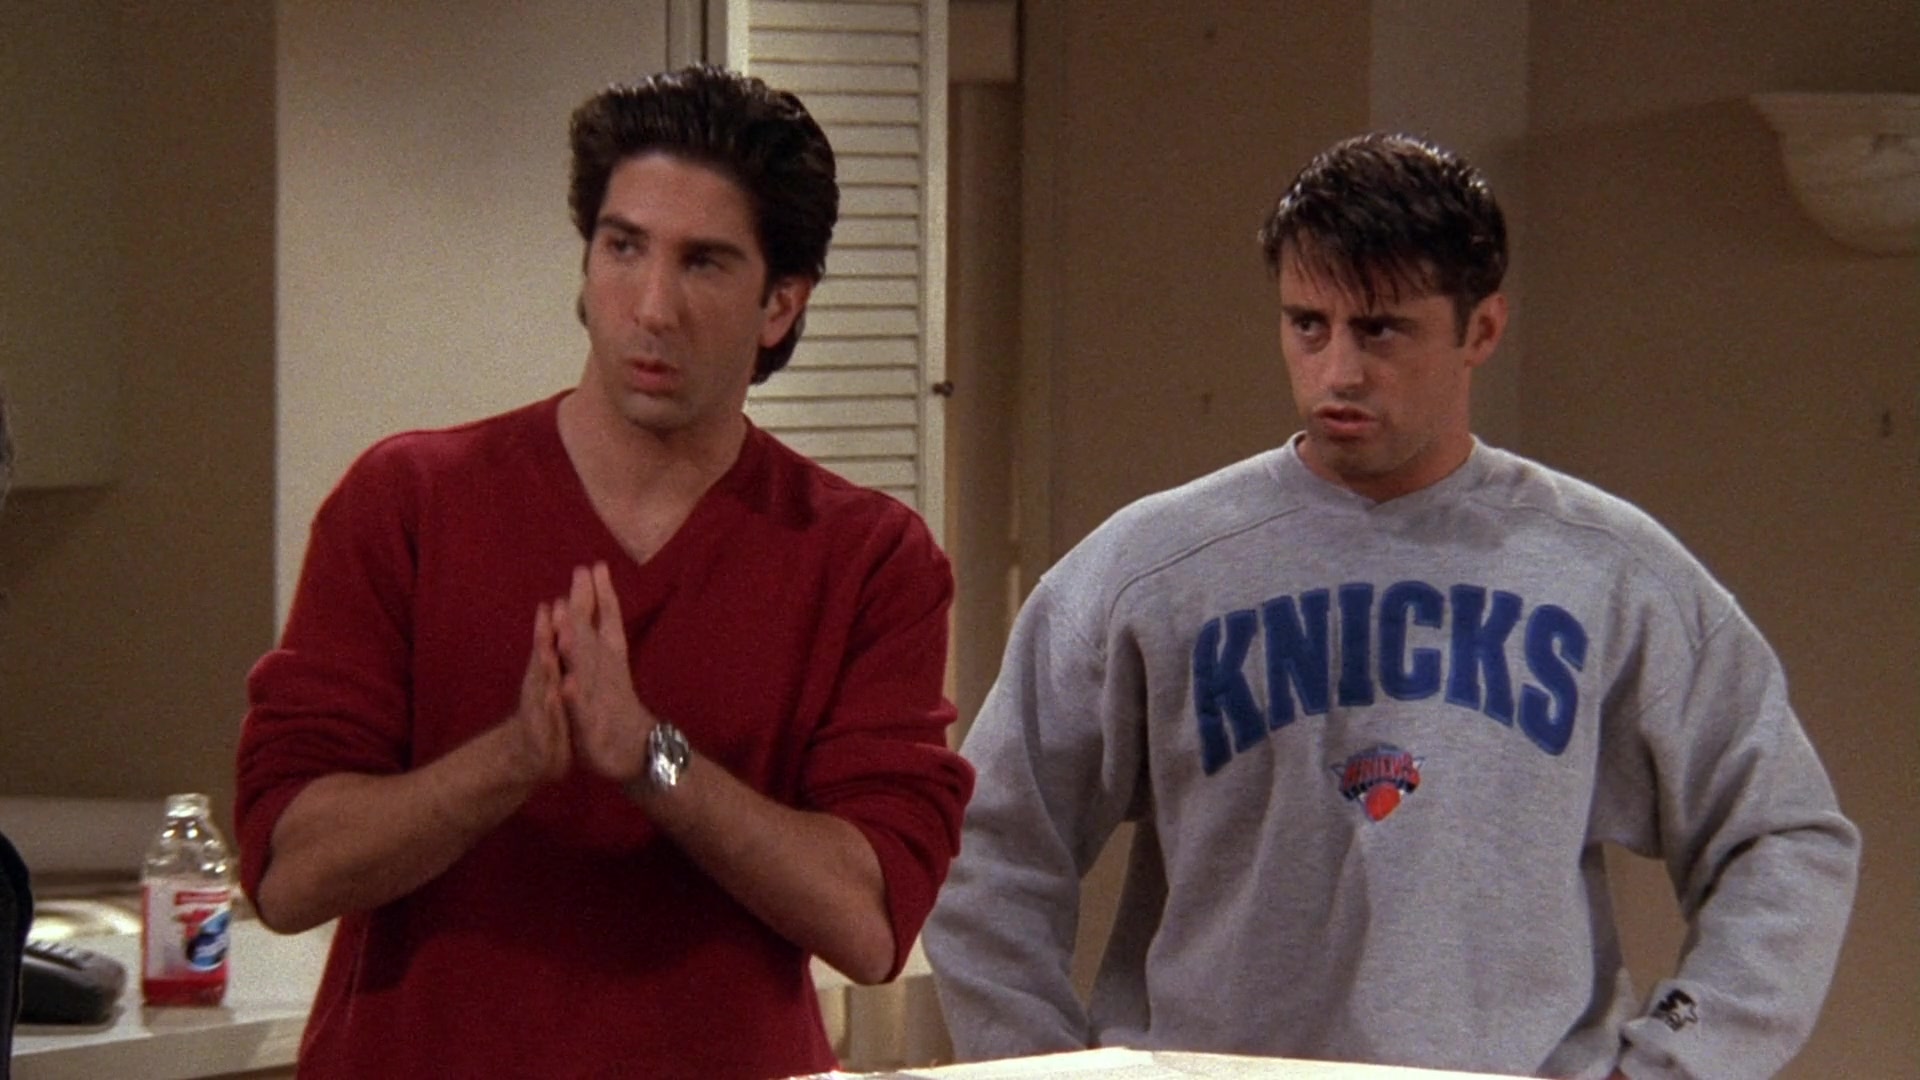 Starter Knicks Sweatshirt Worn By Matt LeBlanc (Joey Tribbiani) In Friends  Season 5 Episode 6 “The One With The Yeti” (1998)